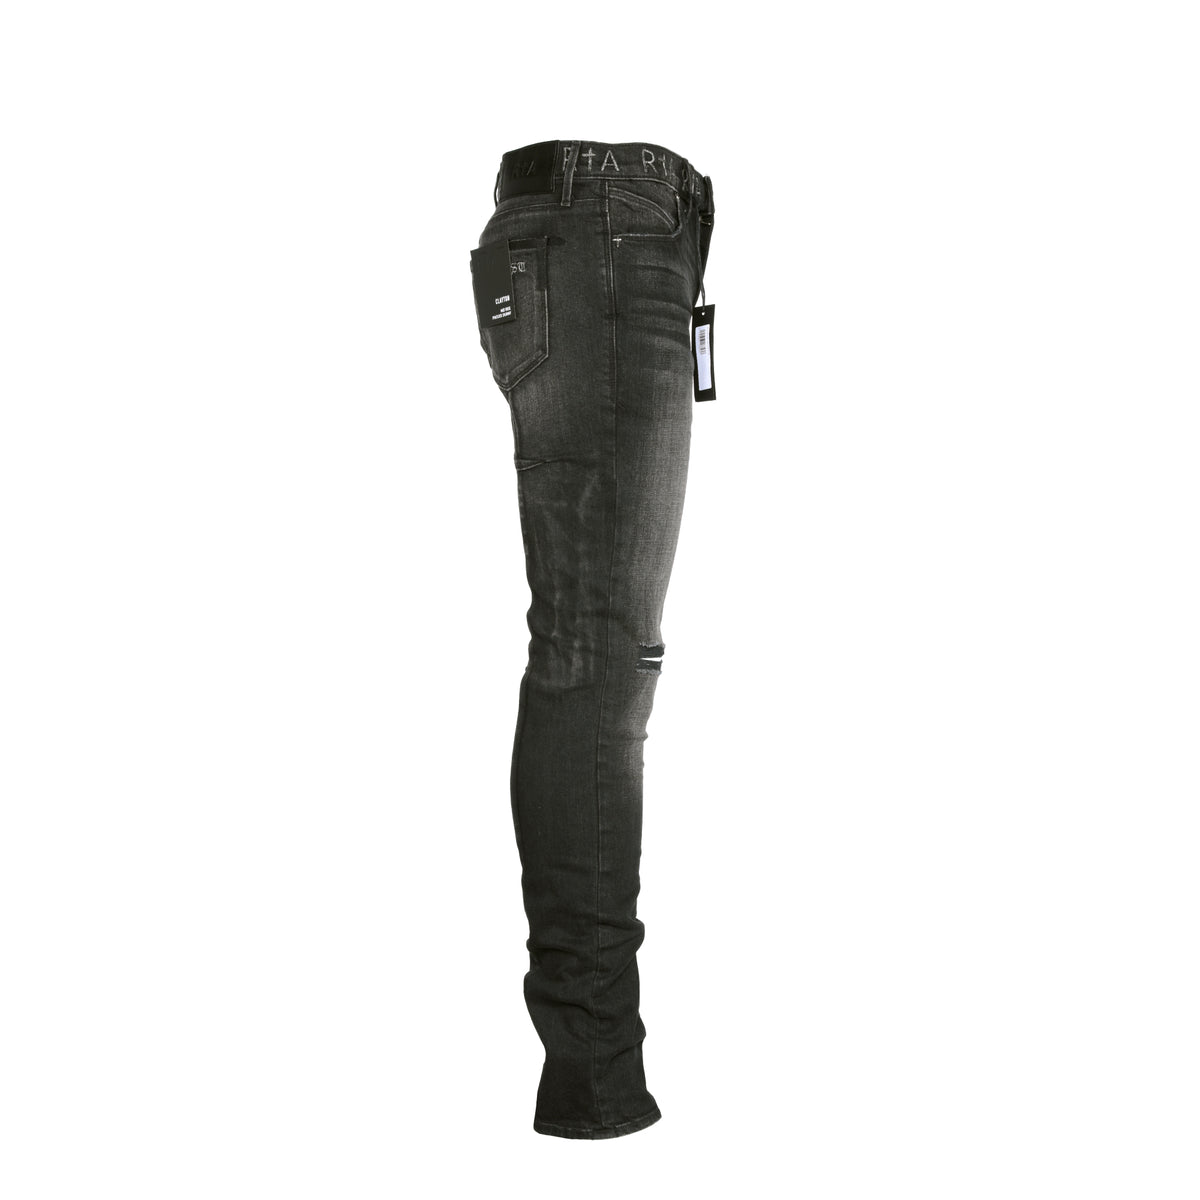 RtA Brand Clayton Charcoal Men's Black Jeans - SIZE Boutique